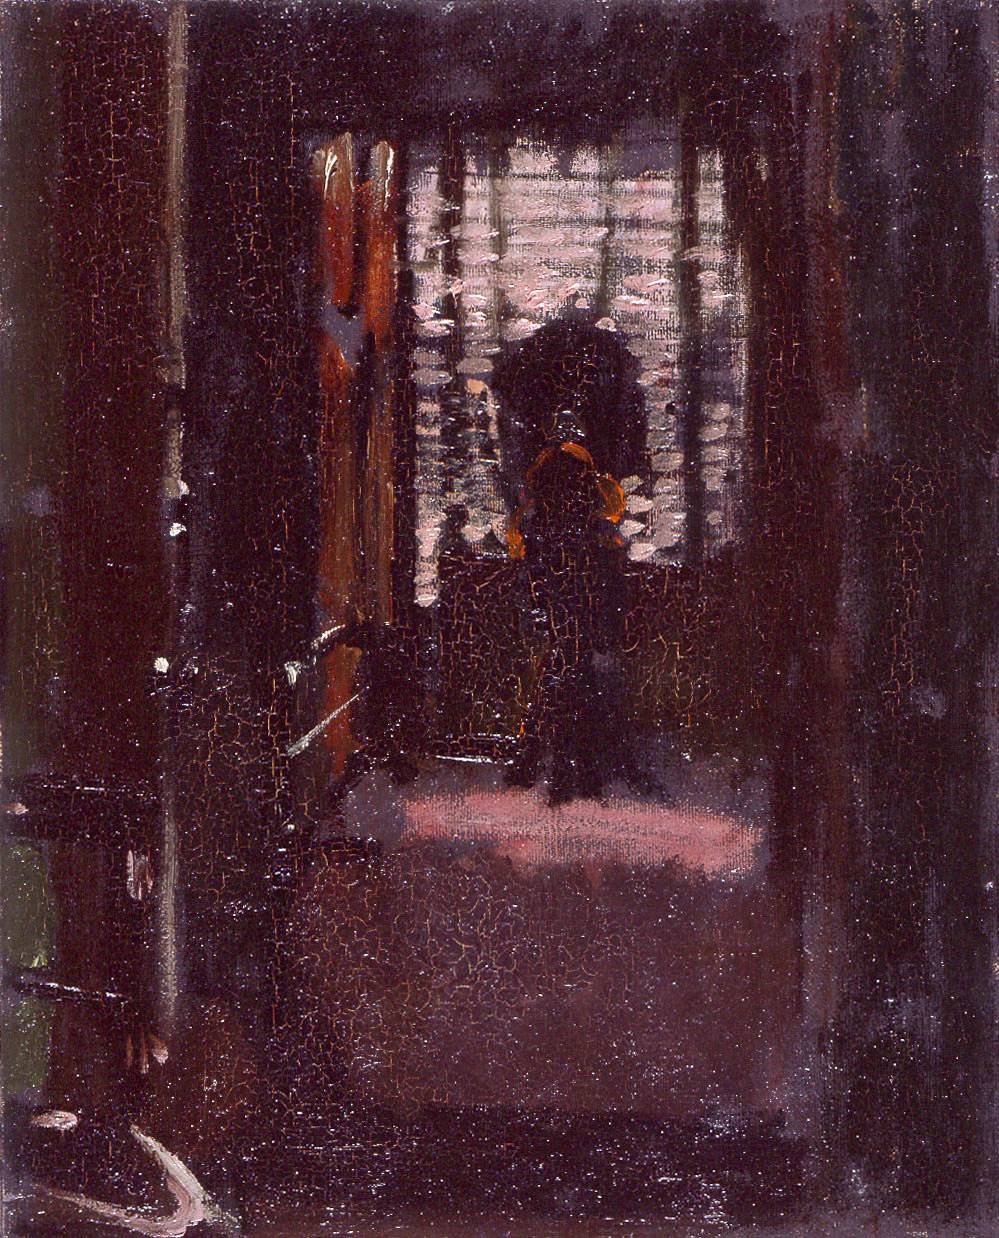 Walter Sickert, "La chambre de Jack l'Éventreur" (ca. 1907), oil on canvas, Manchester City Art Galleries.